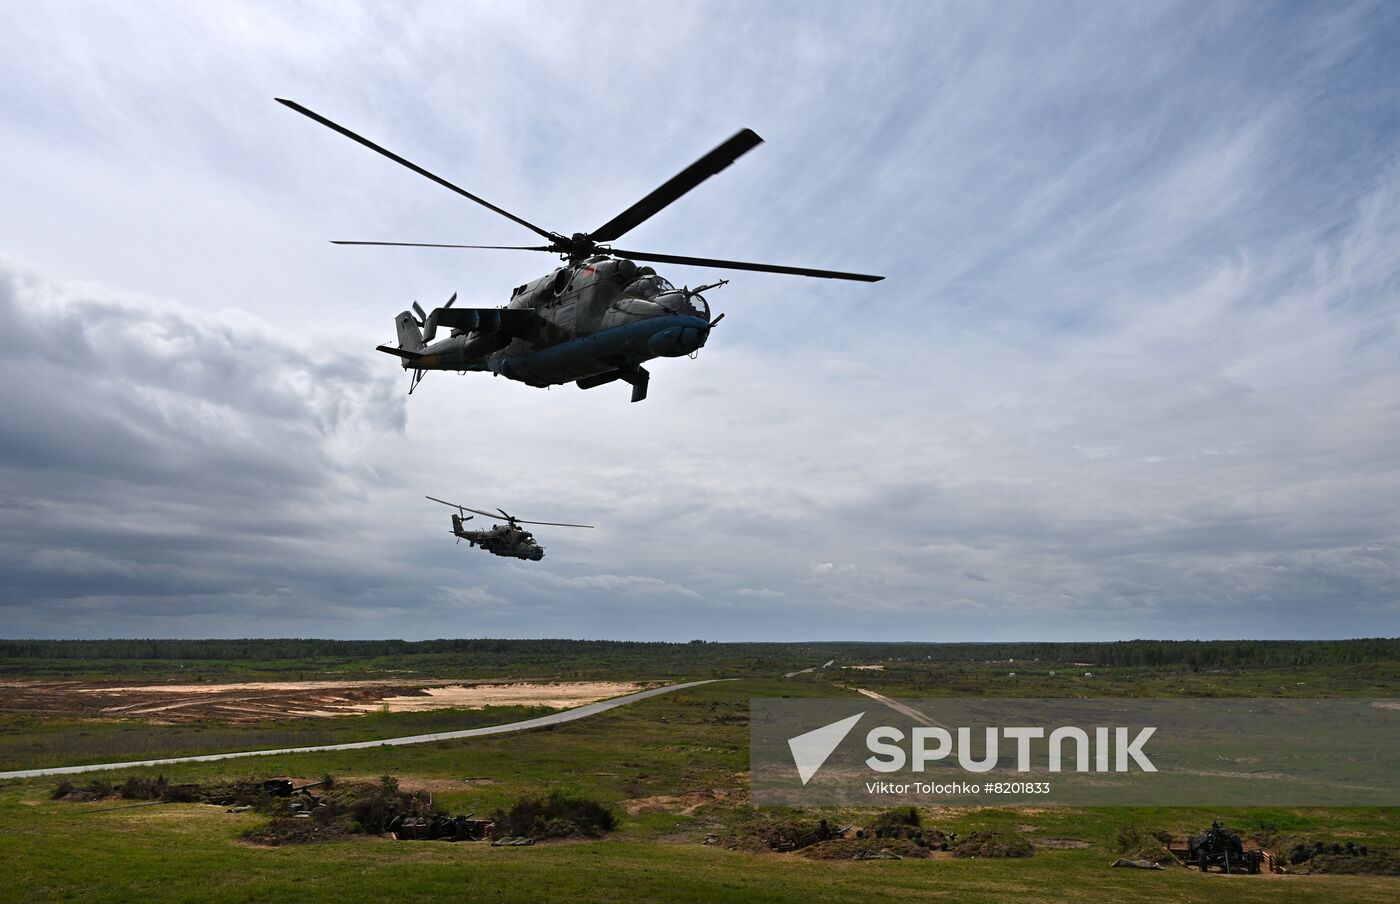 Belarus Defence Military Drills